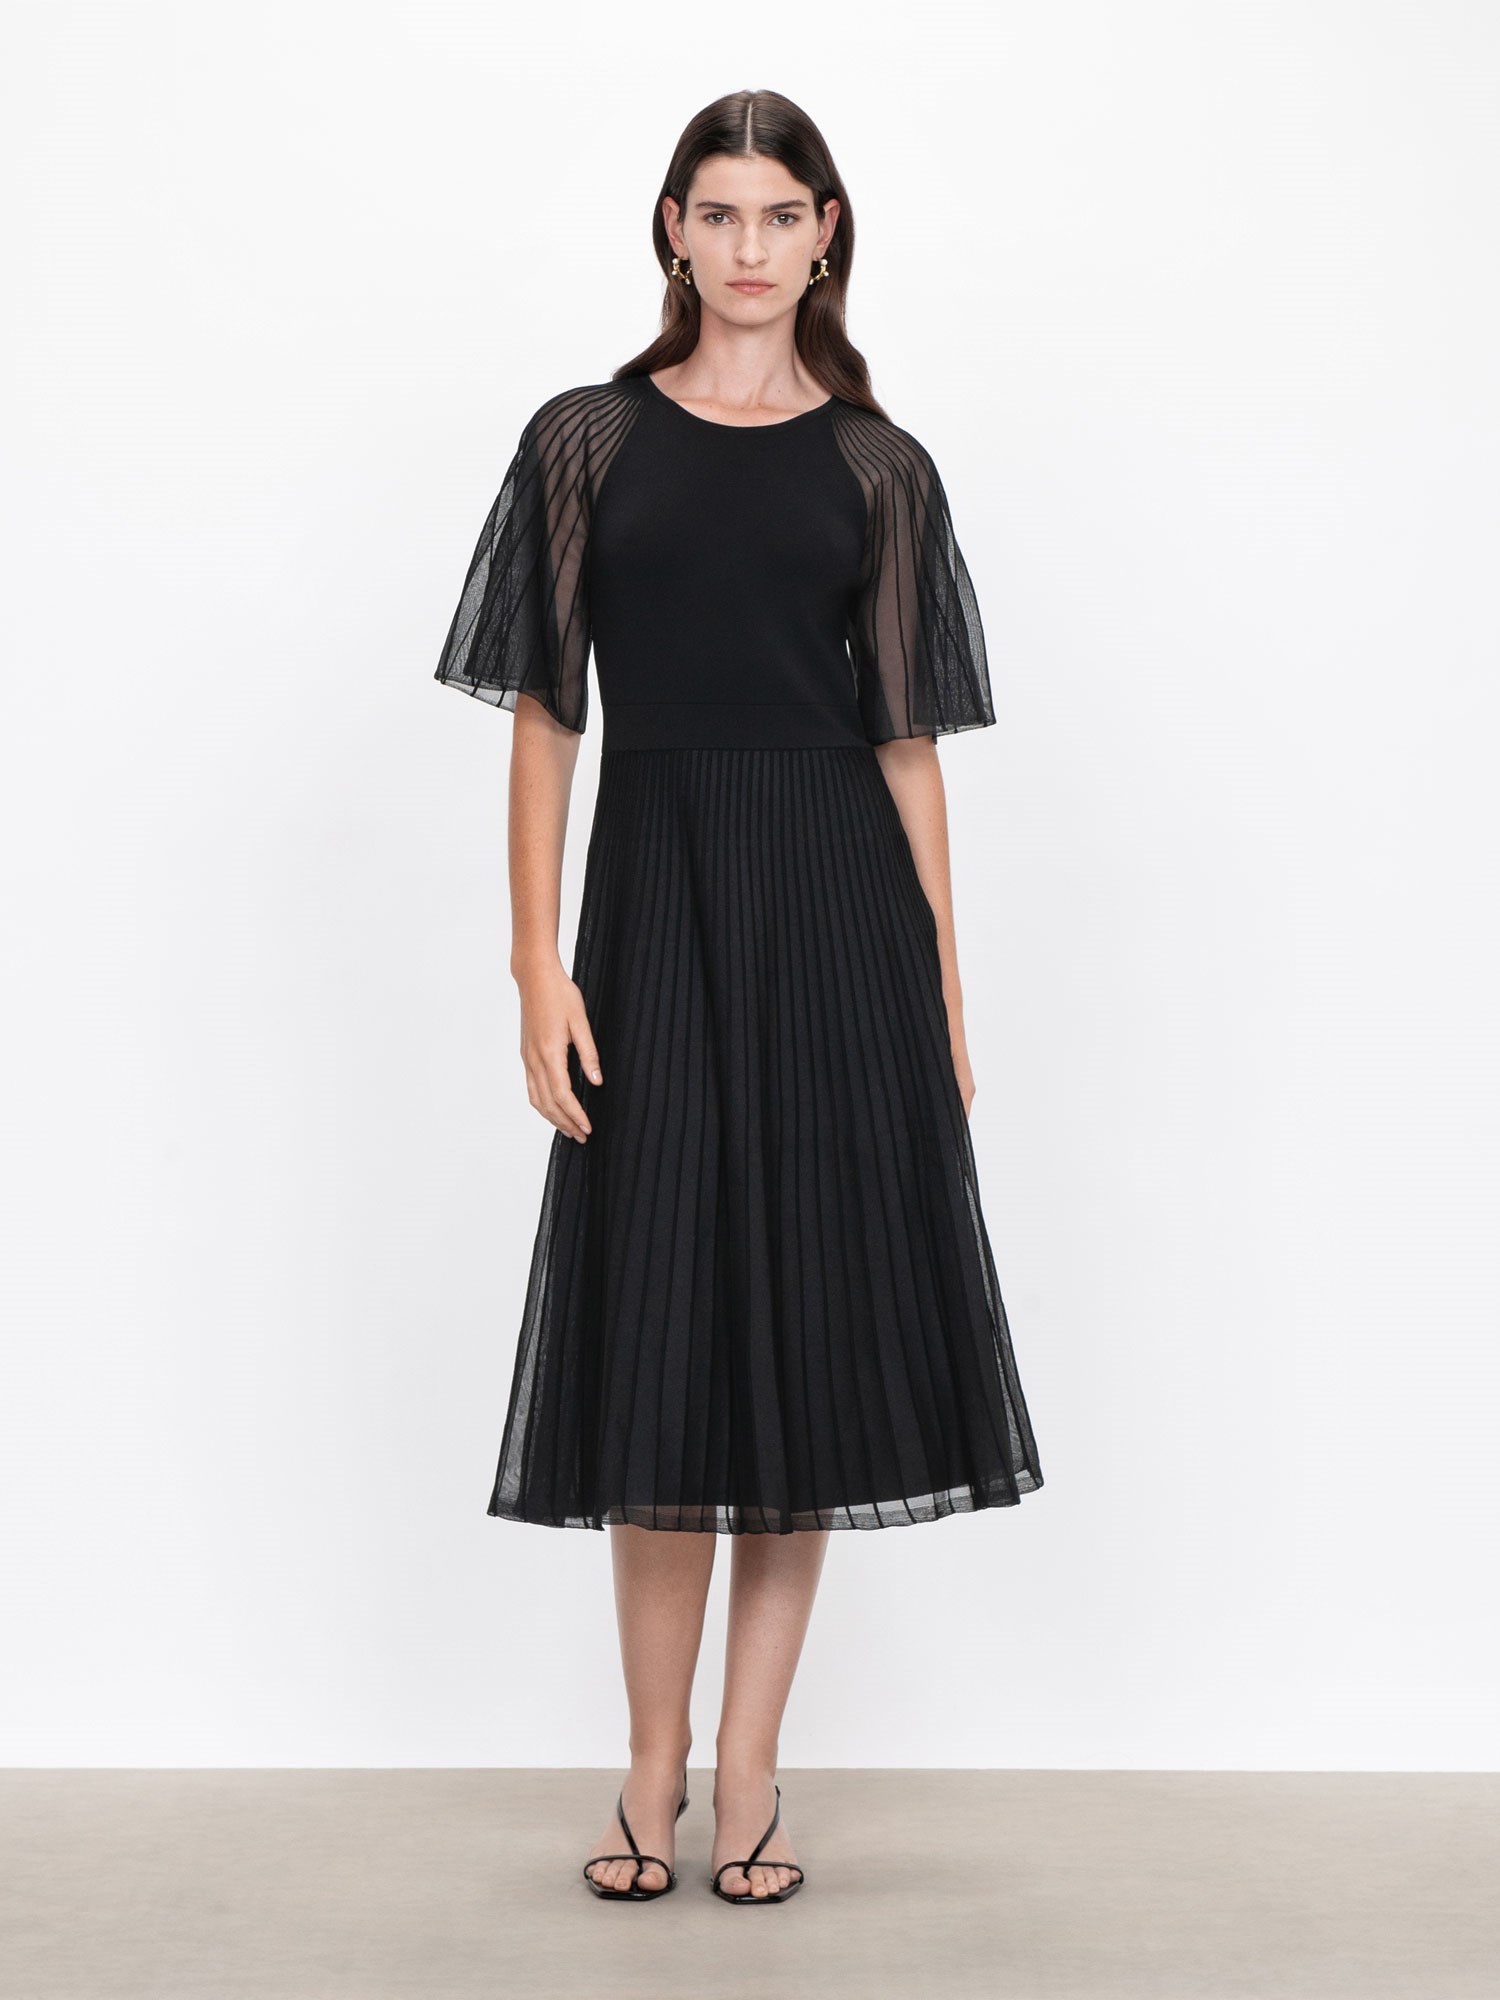 Sheer Sleeve And Skirt Knit Dress | Buy Knitwear Online - Veronika Maine